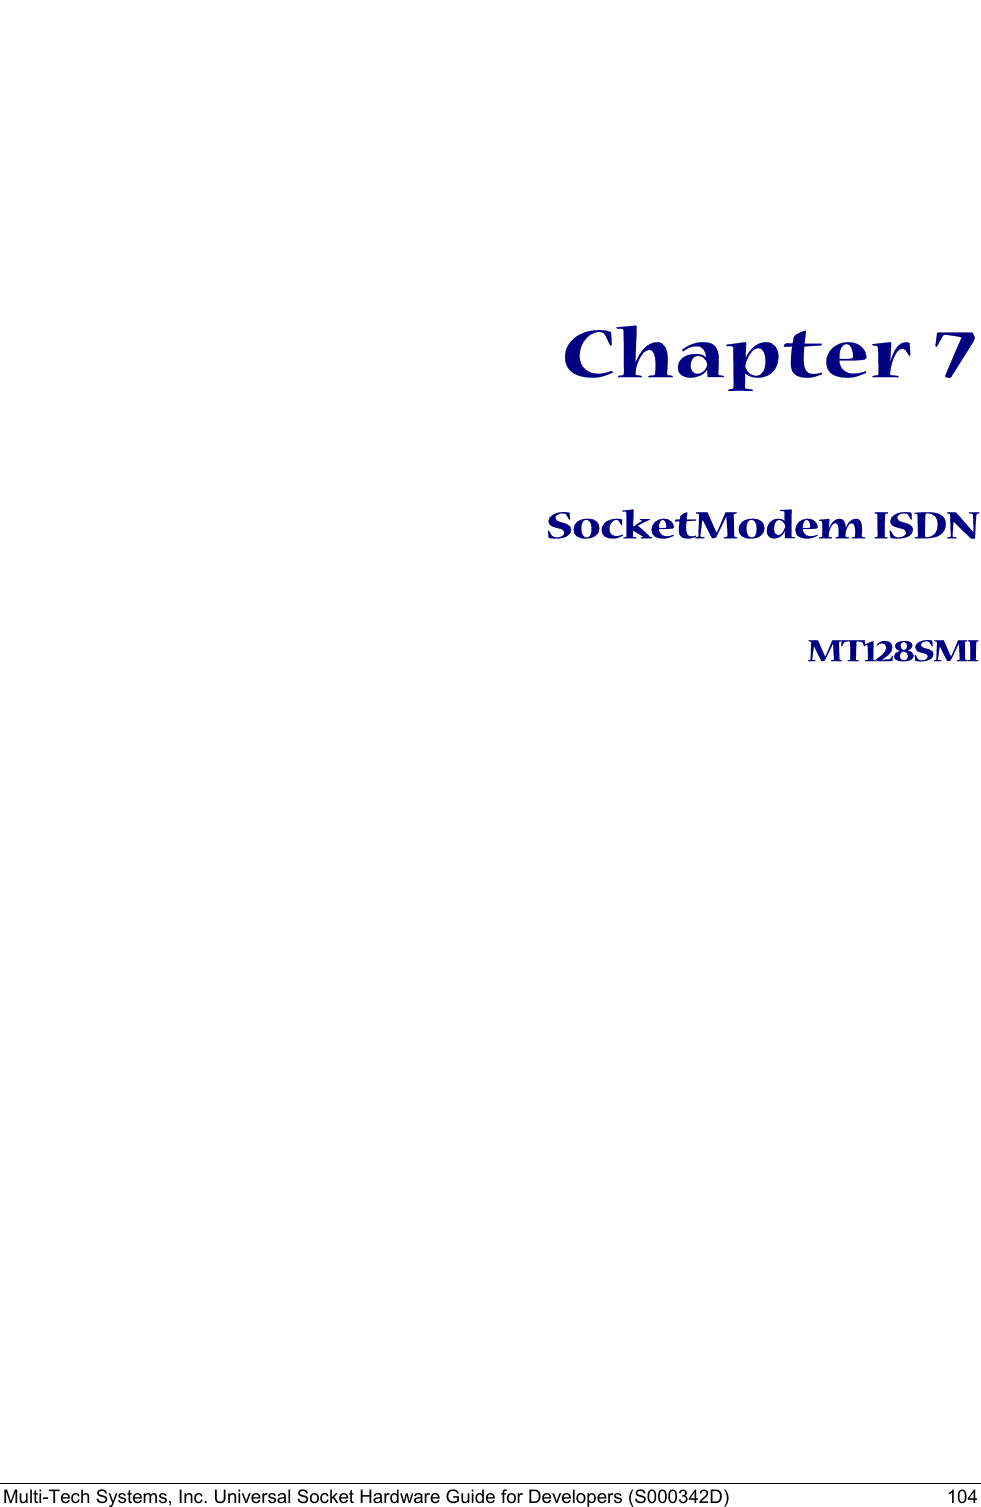  Multi-Tech Systems, Inc. Universal Socket Hardware Guide for Developers (S000342D)  104            Chapter 7   SocketModem ISDN   MT128SMI                 